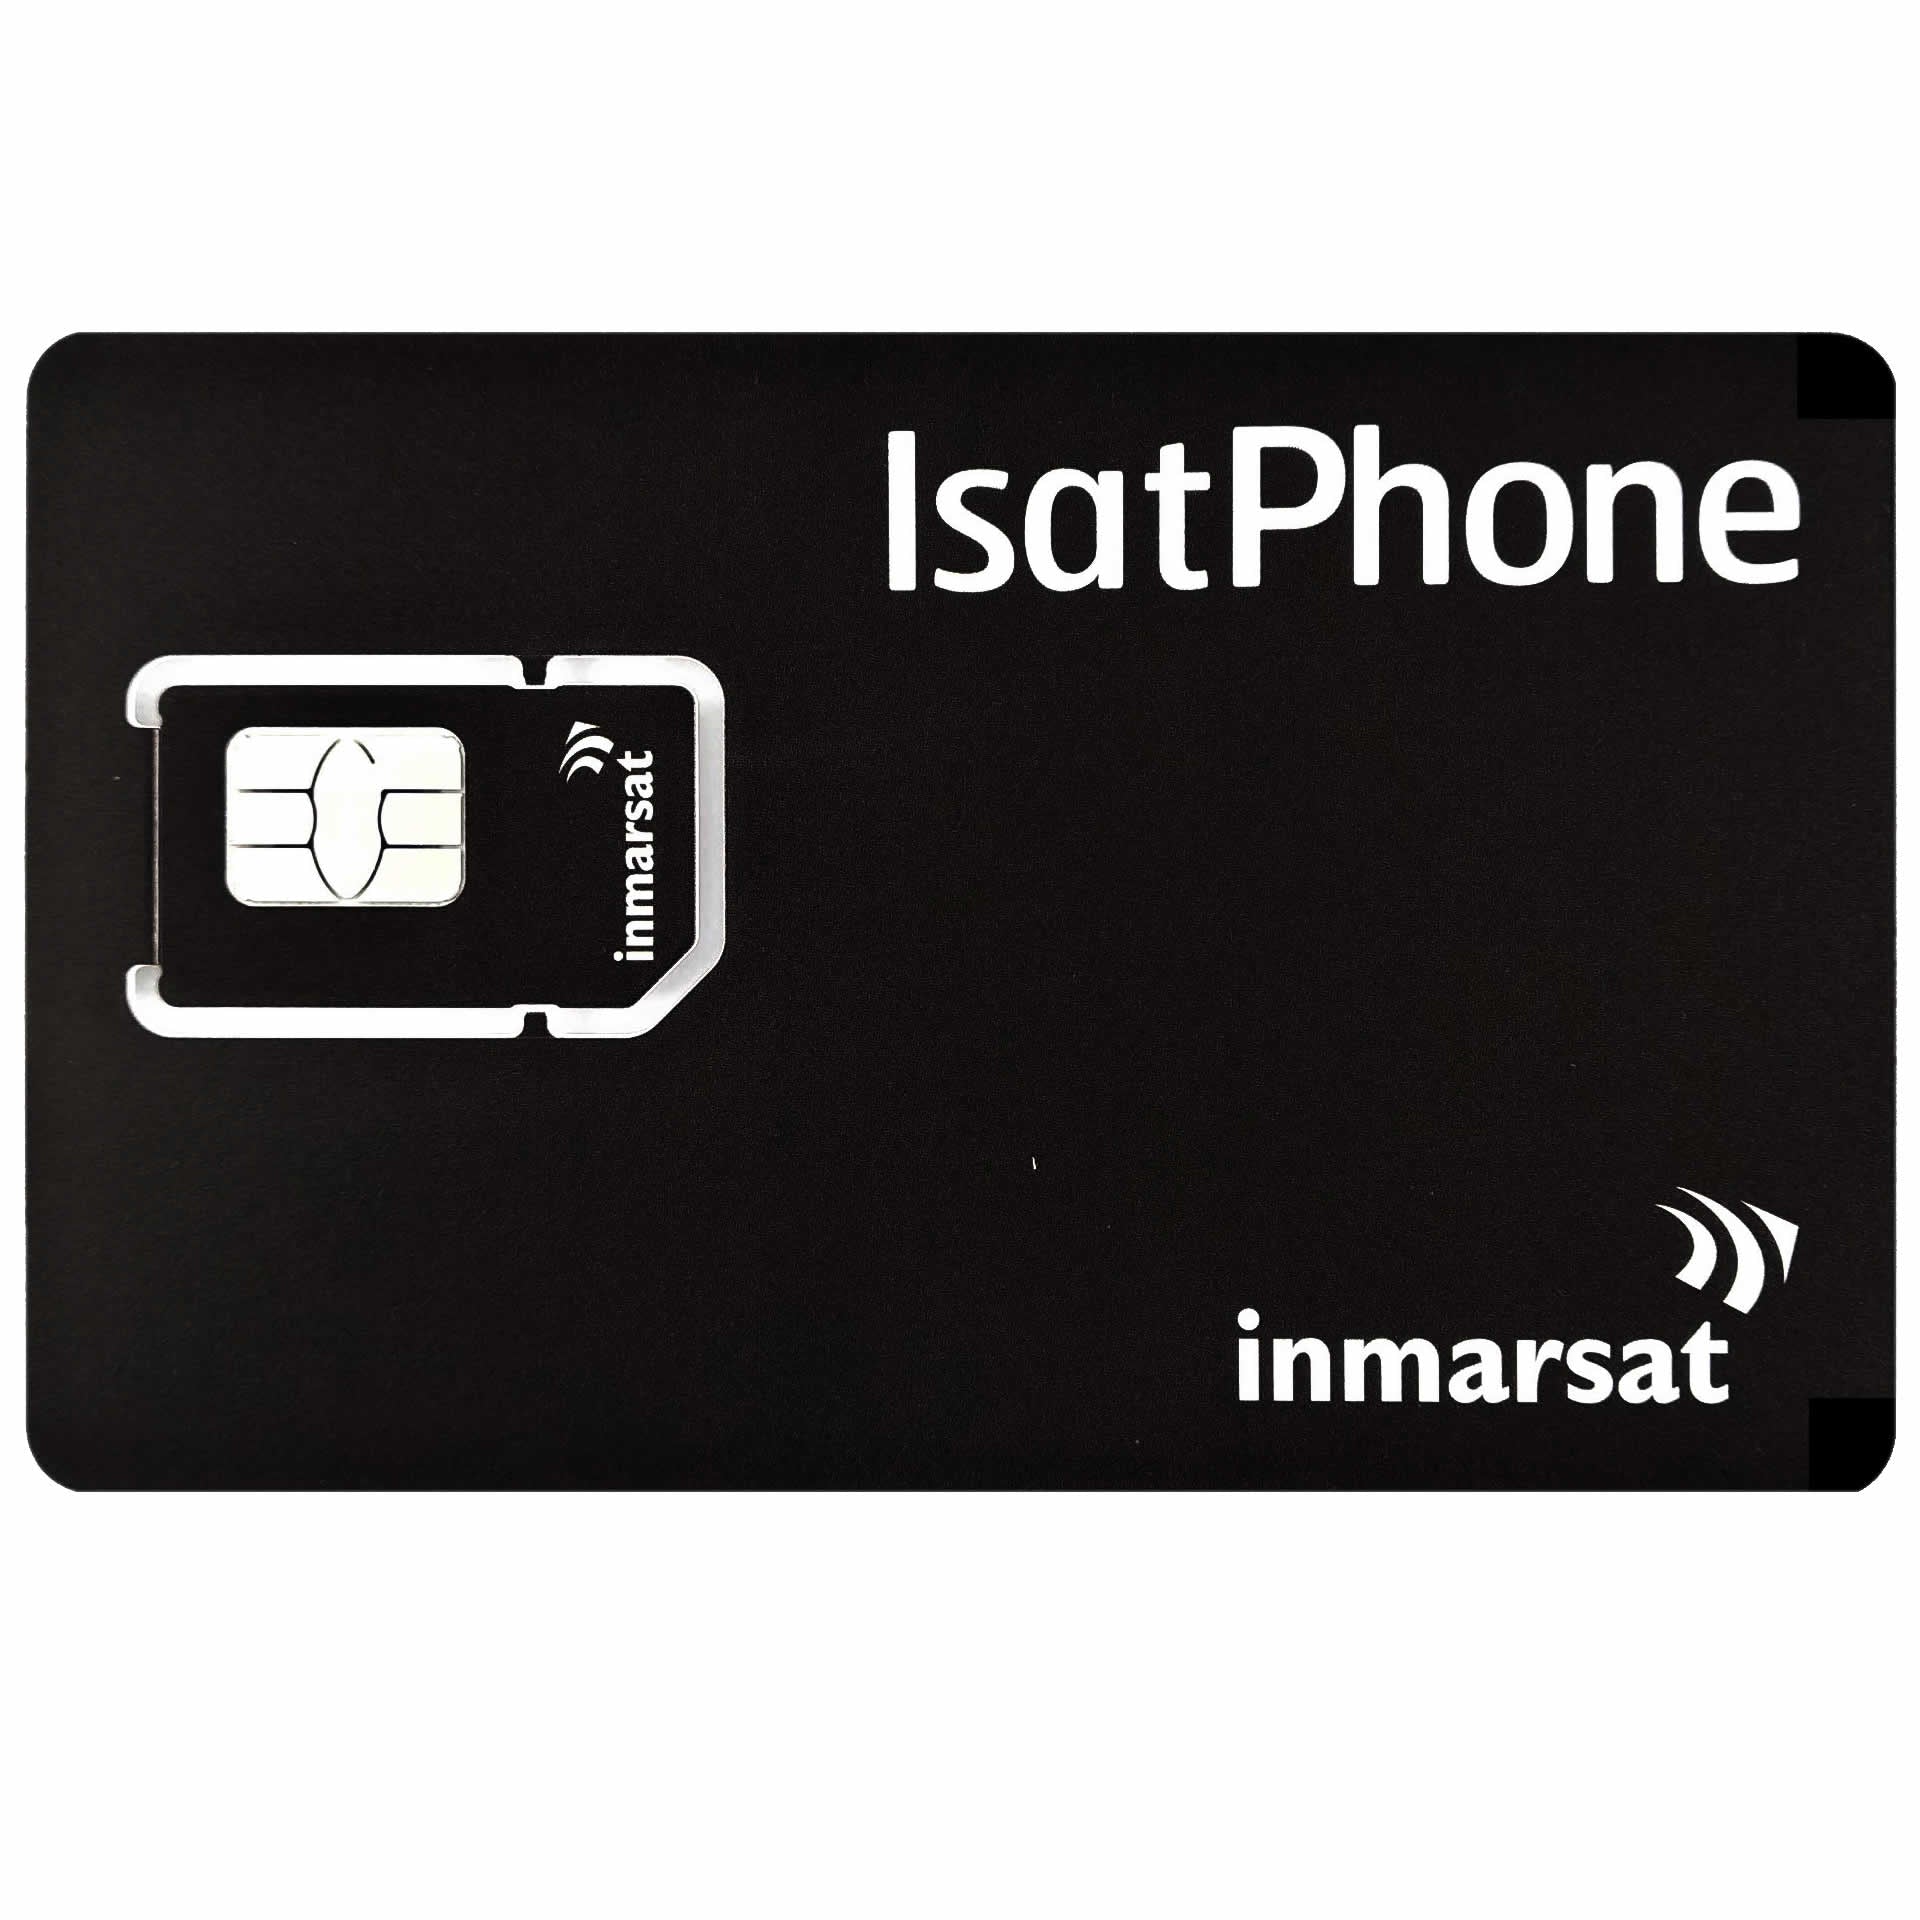 INMARSAT Wiederaufladbare ISATPHONE Prepaid-Karte - 30 TAGE RECHARGE